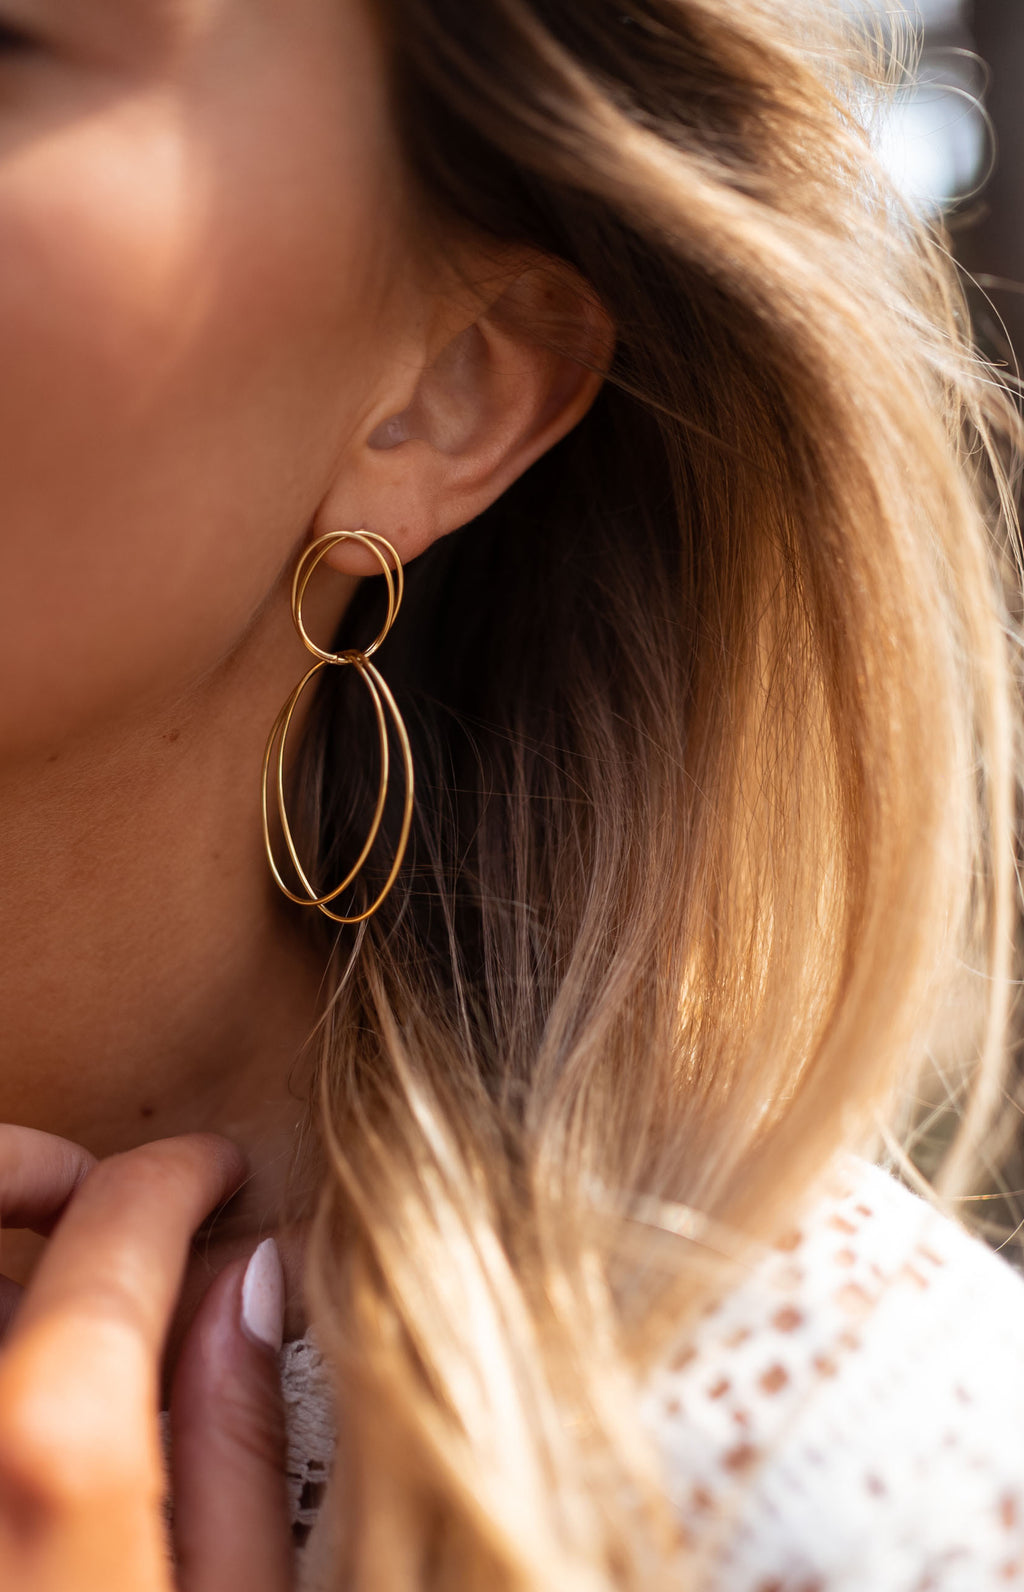 Joop earrings - Golden